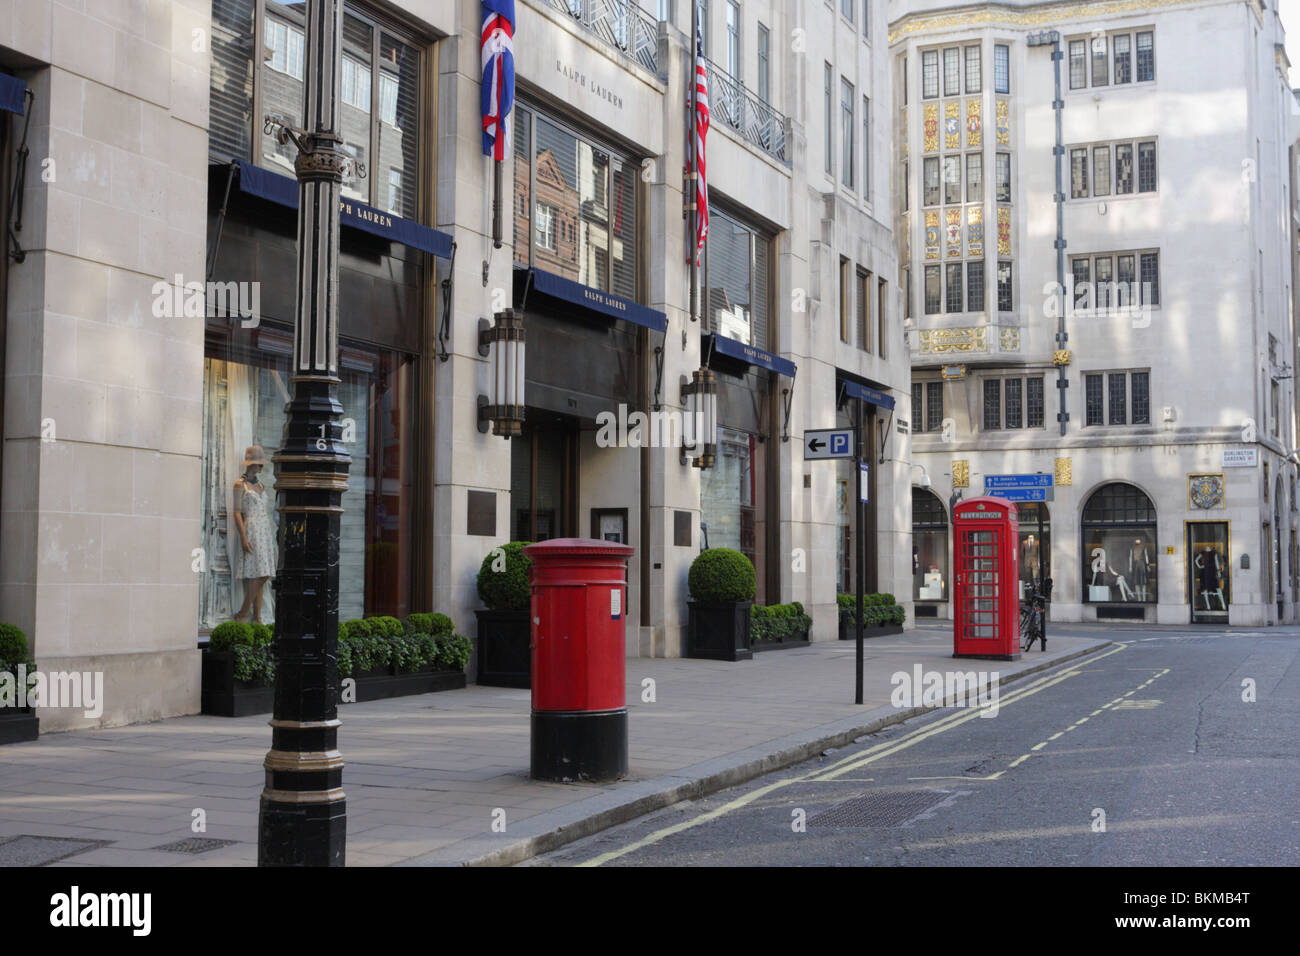 Polo Ralph Lauren Opens Its London Flagship Store